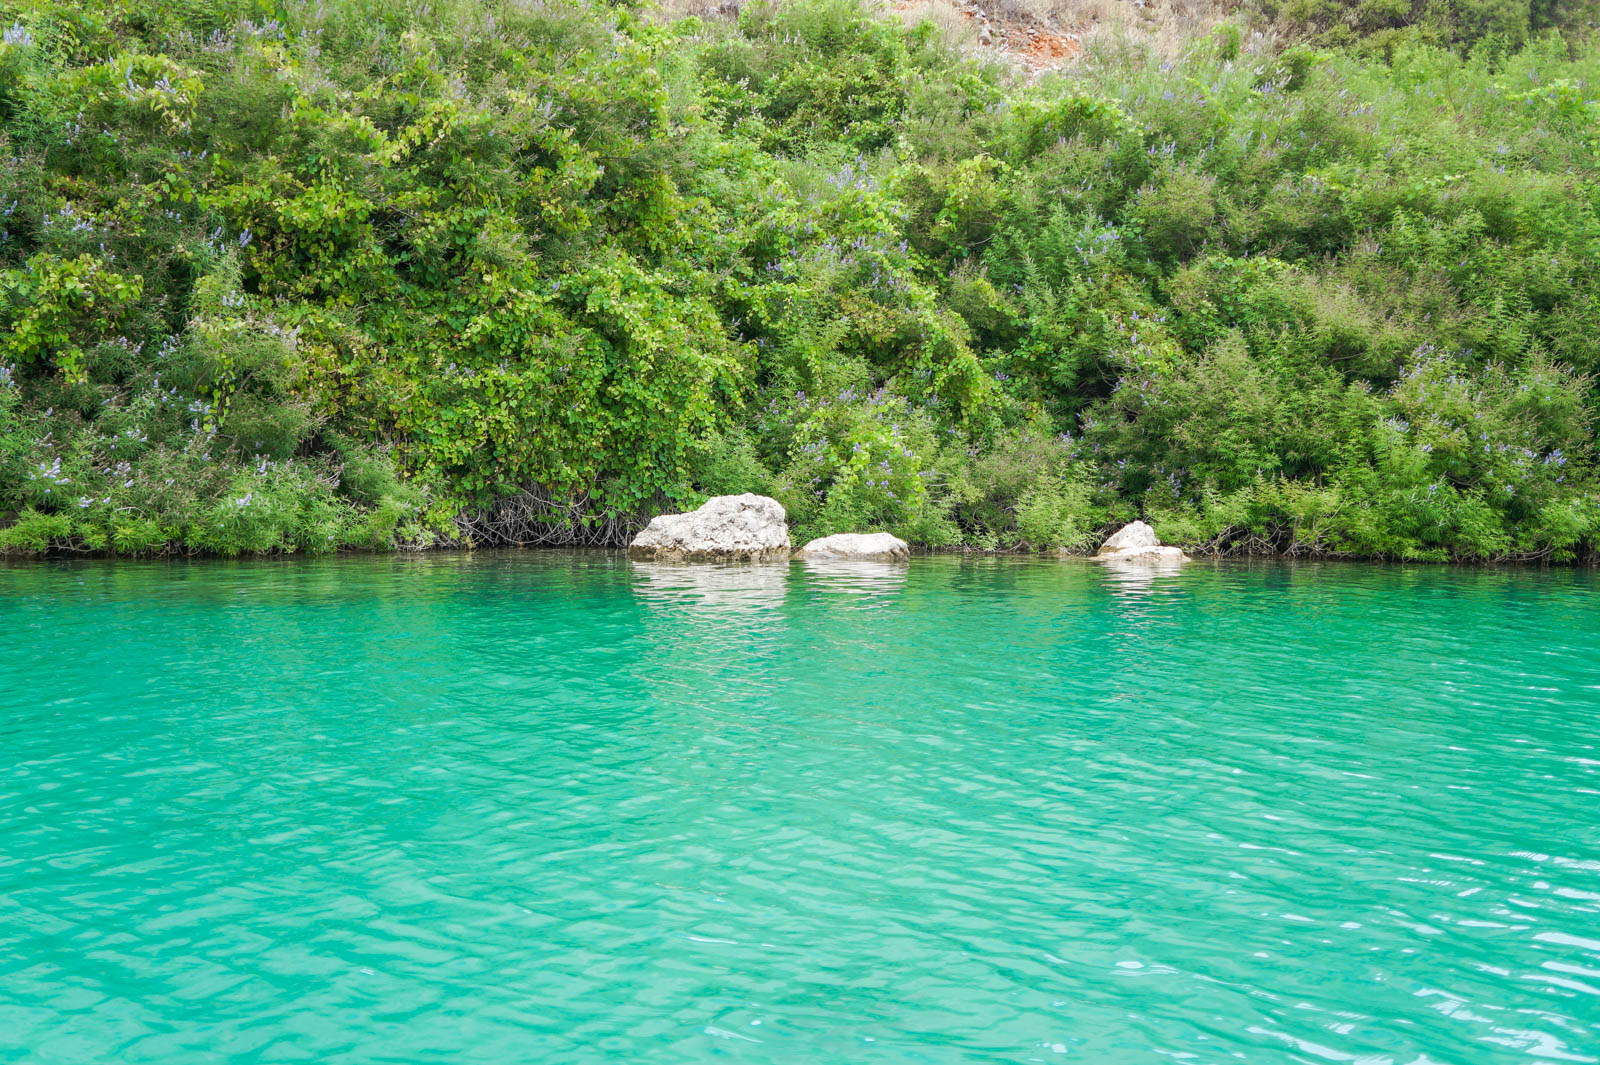 kourna-lake-crete-greece-la-vie-en-blog-all-rights-reserved-2